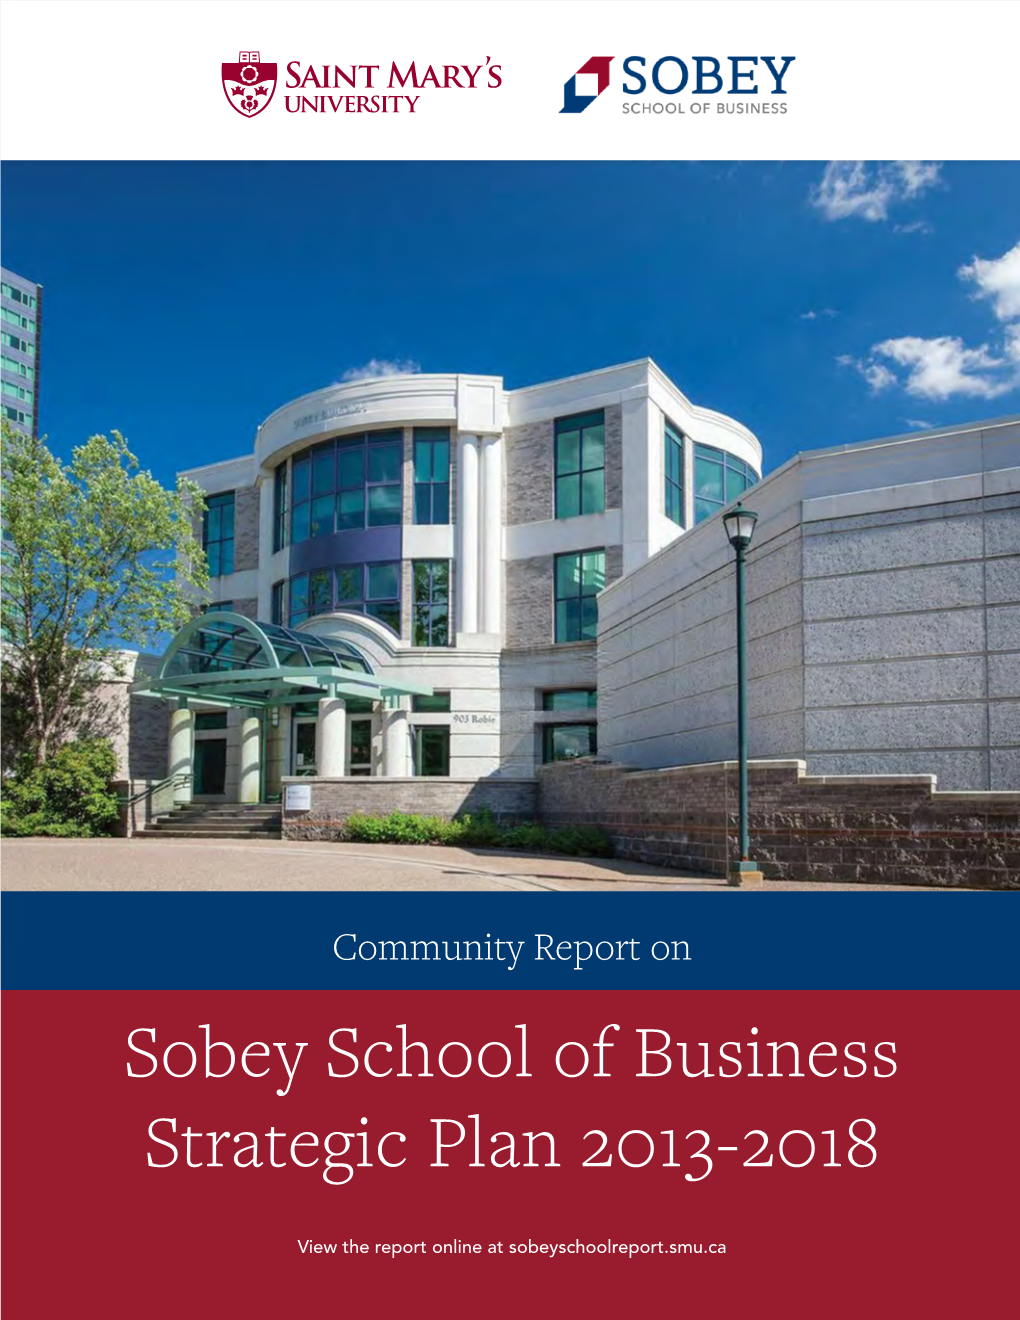 Sobey School of Business Strategic Plan 2013-2018